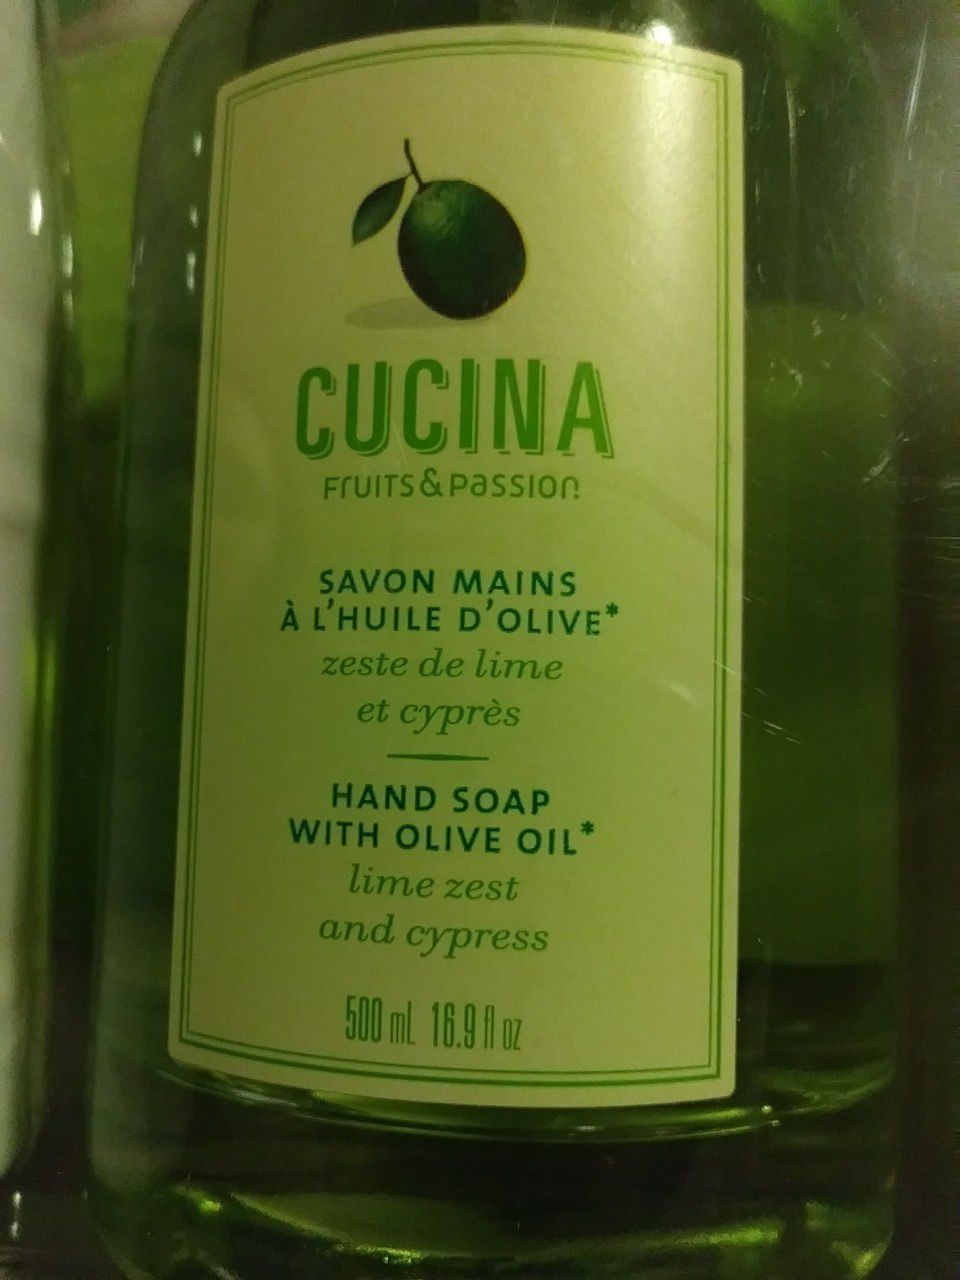 CUCINA Fruits & Passion - Coriander - hand soap set